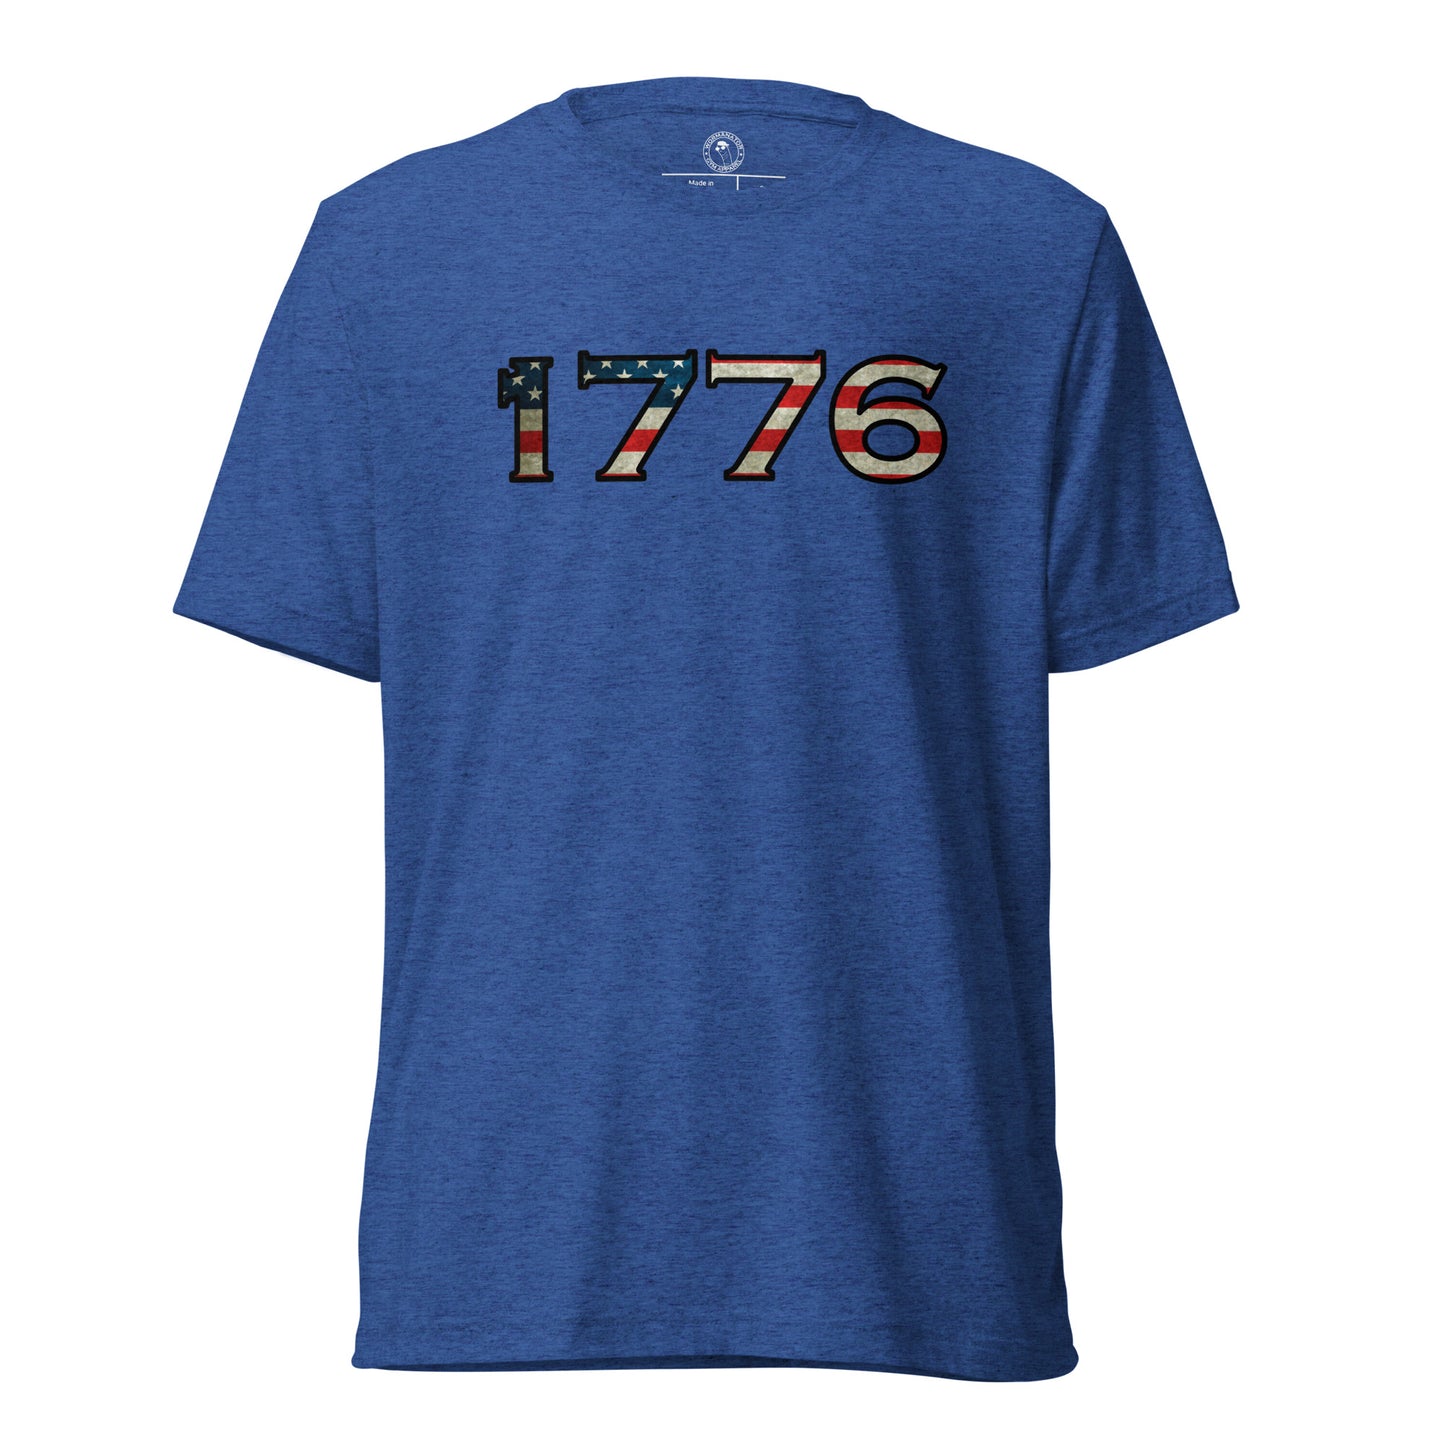 1776 T-Shirt in True Royal Triblend